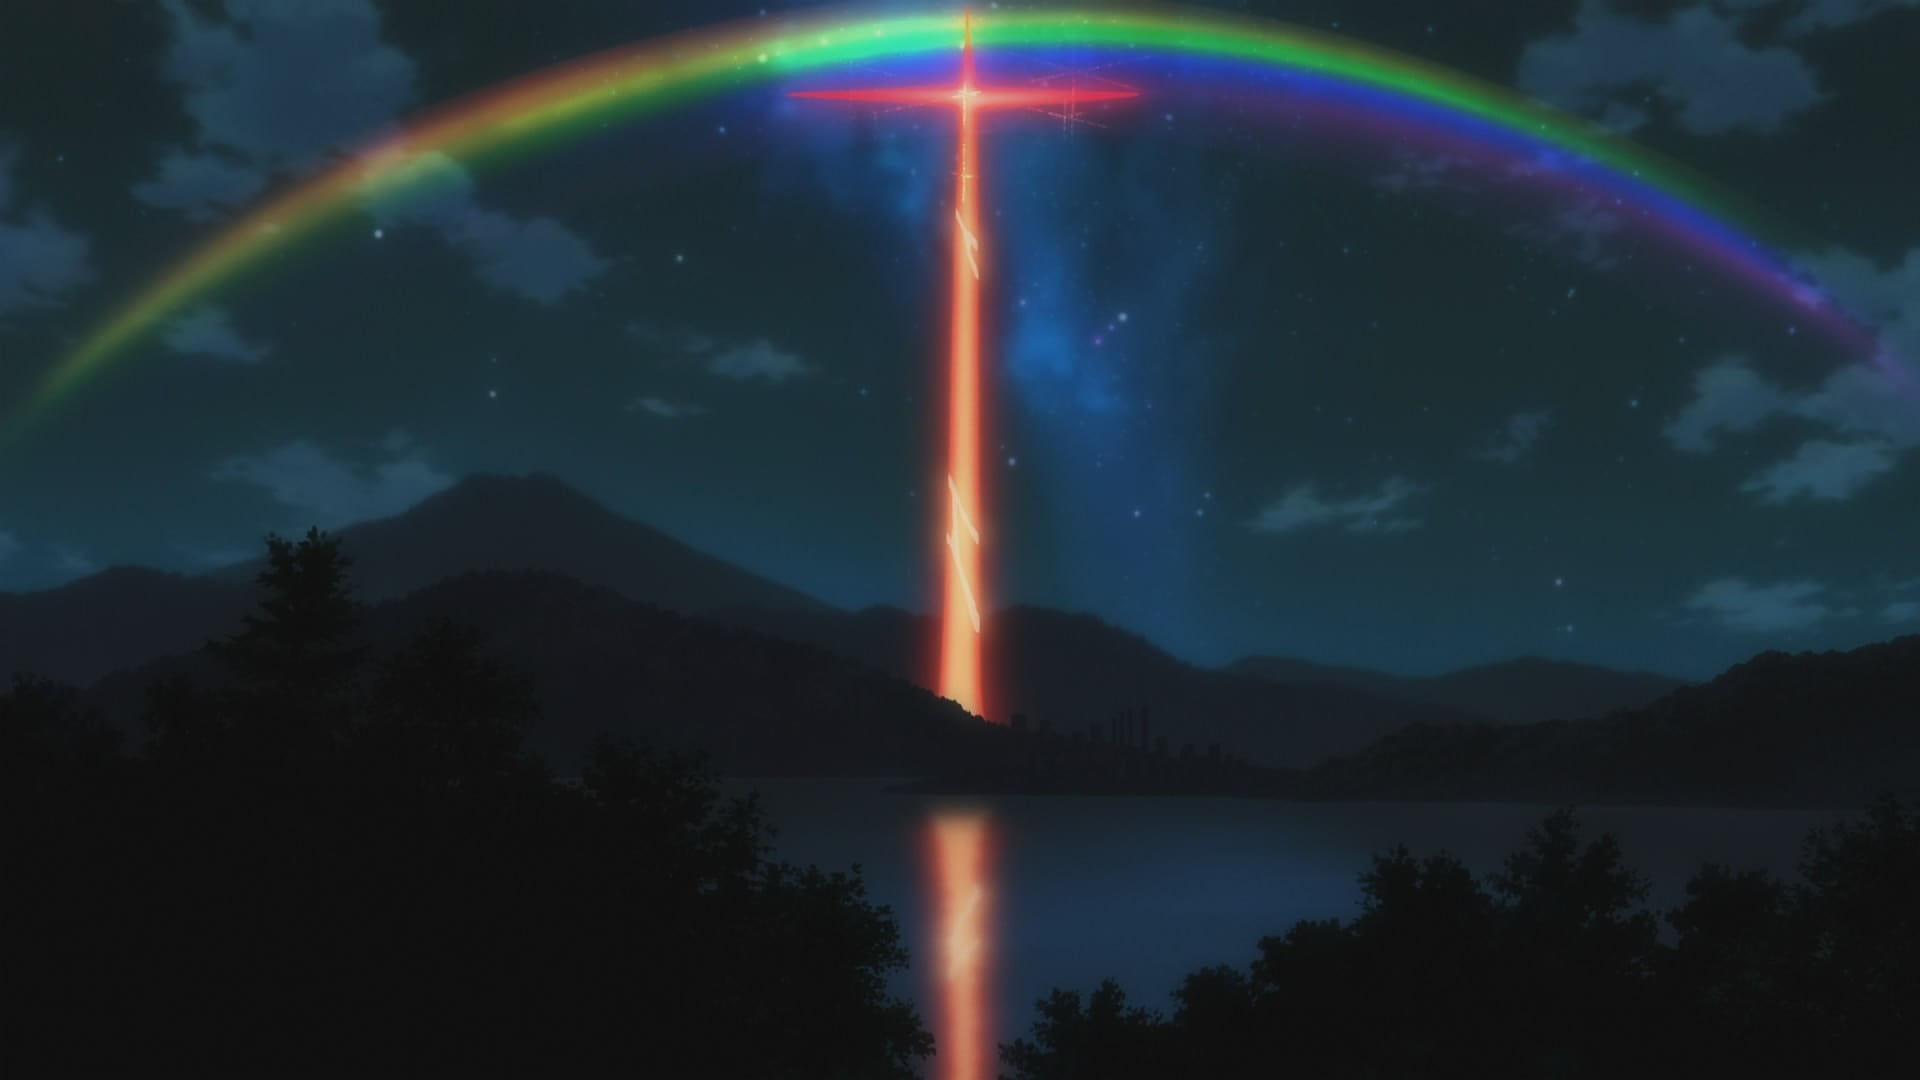 Neon Genesis Evangelion, beauty in nature, scenics - nature